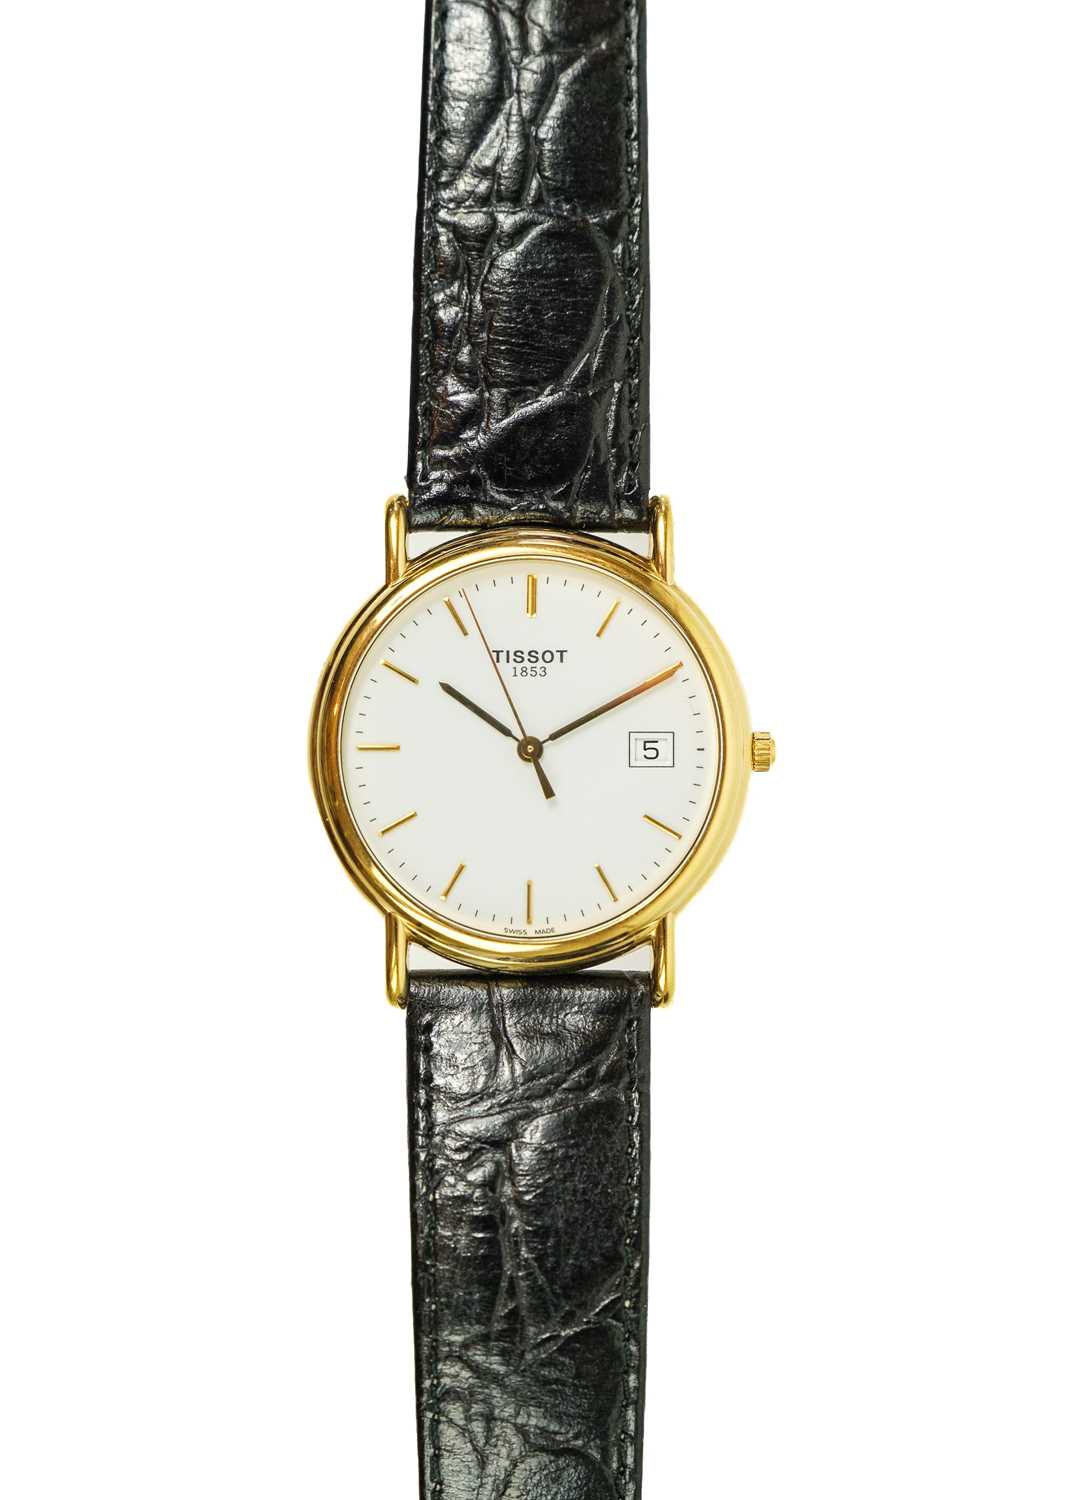 TISSOT - A 'Gold Collection' 18ct gold-cased gentleman's quartz dress wristwatch.